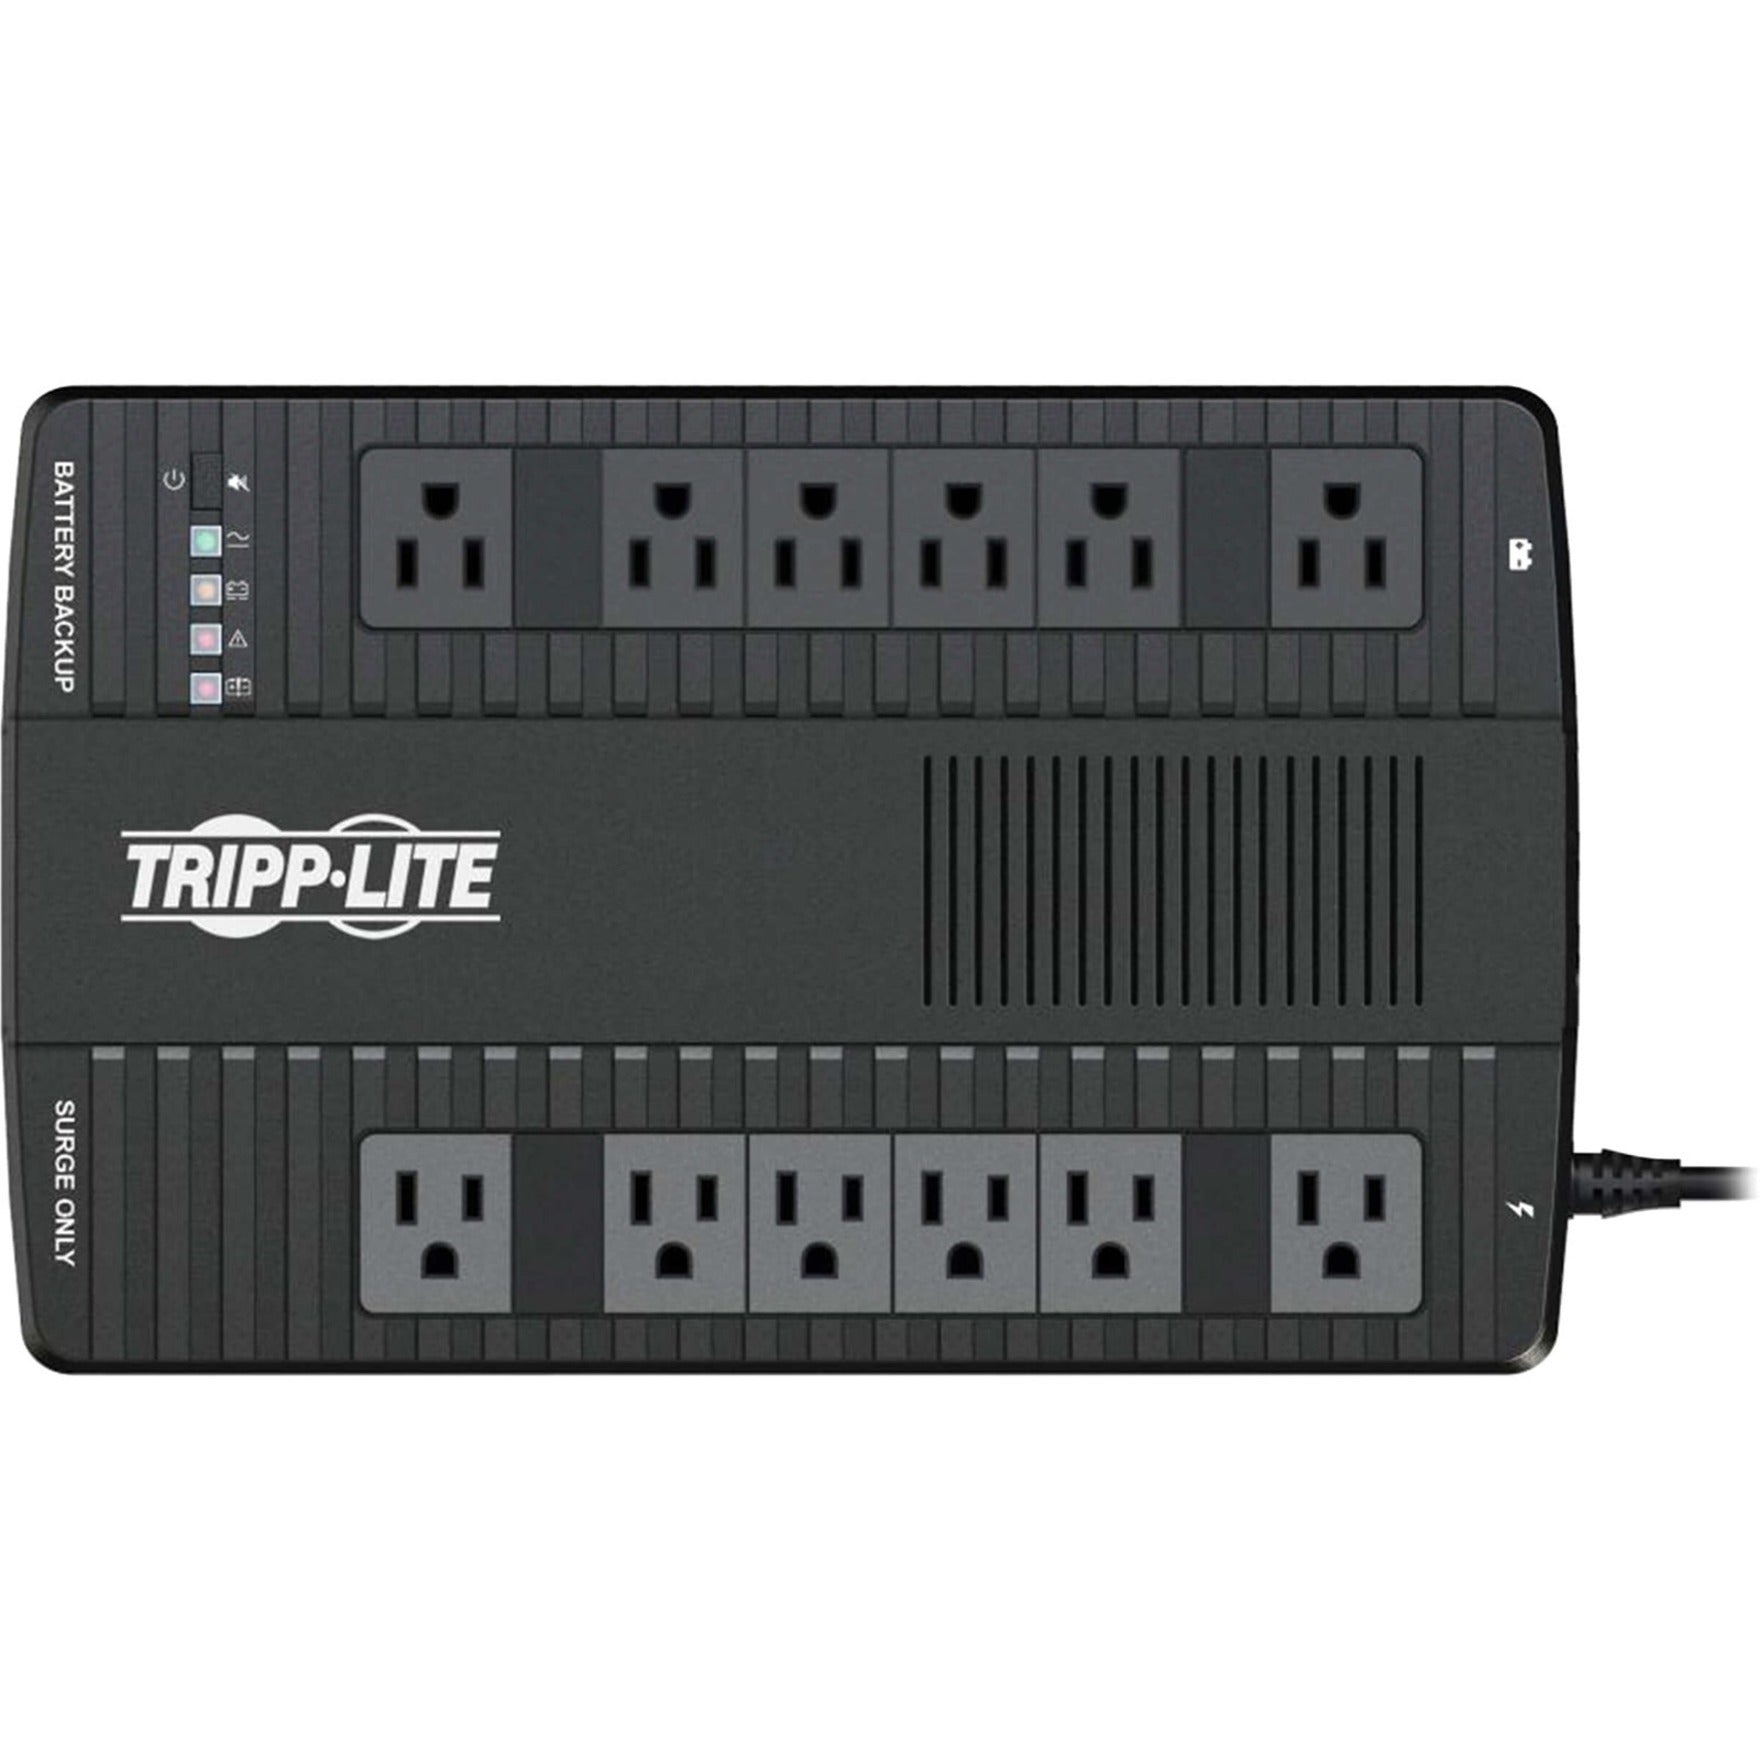 Tripp Lite OMNISMART750MX OmniSmart 750VA Ultra-compact Desktop/Tower/Wall Mount UPS, 2 Year Warranty, Pure Sine Wave, 750 VA/460 W Load Capacity